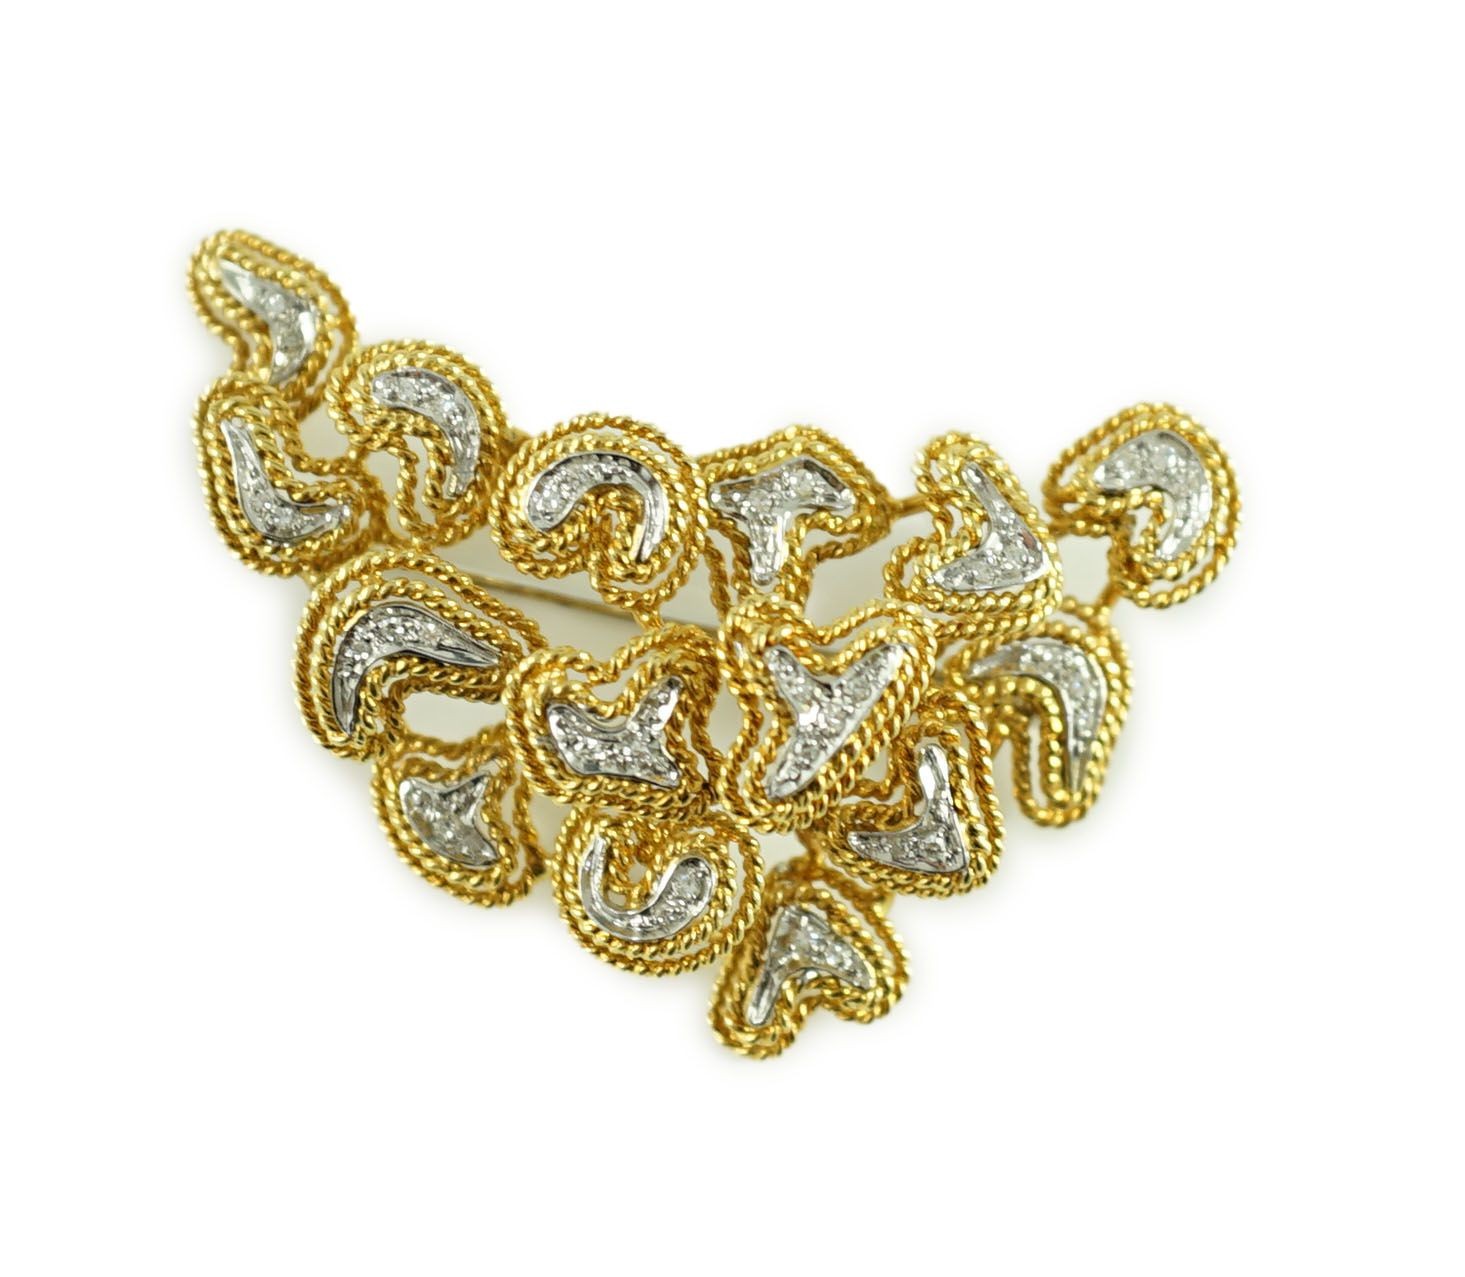 A modern stylish Italian 750 gold and diamond chip set modernist brooch